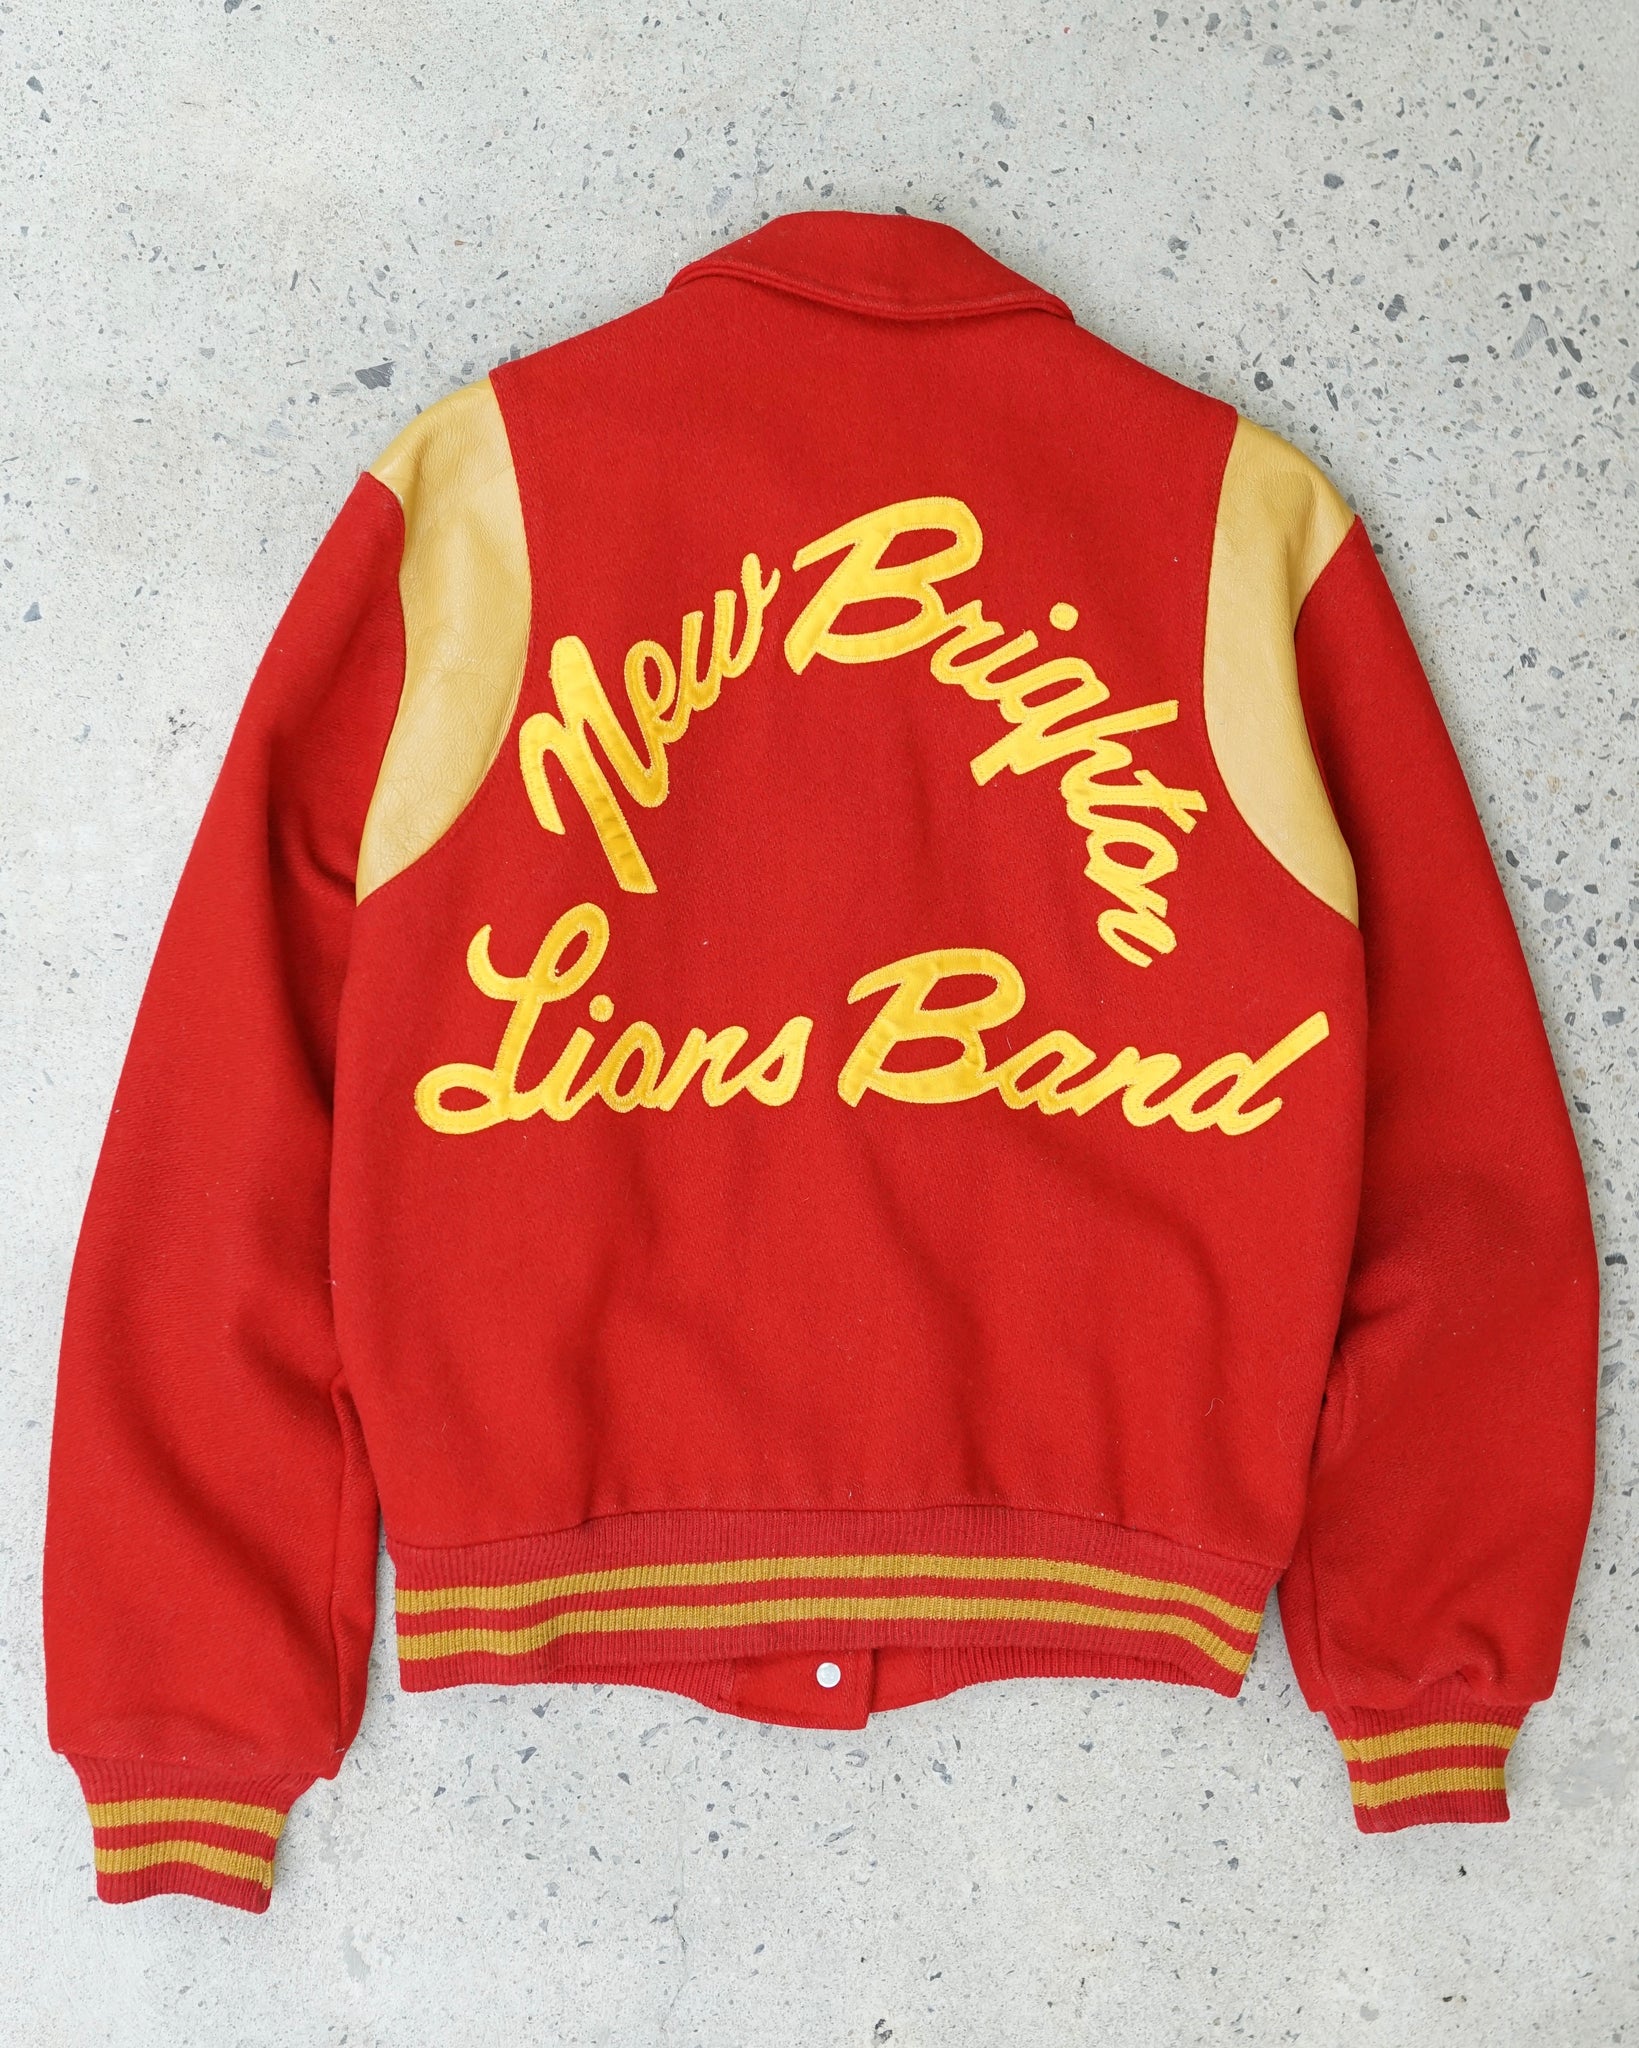 new brighton lions band jacket - XS